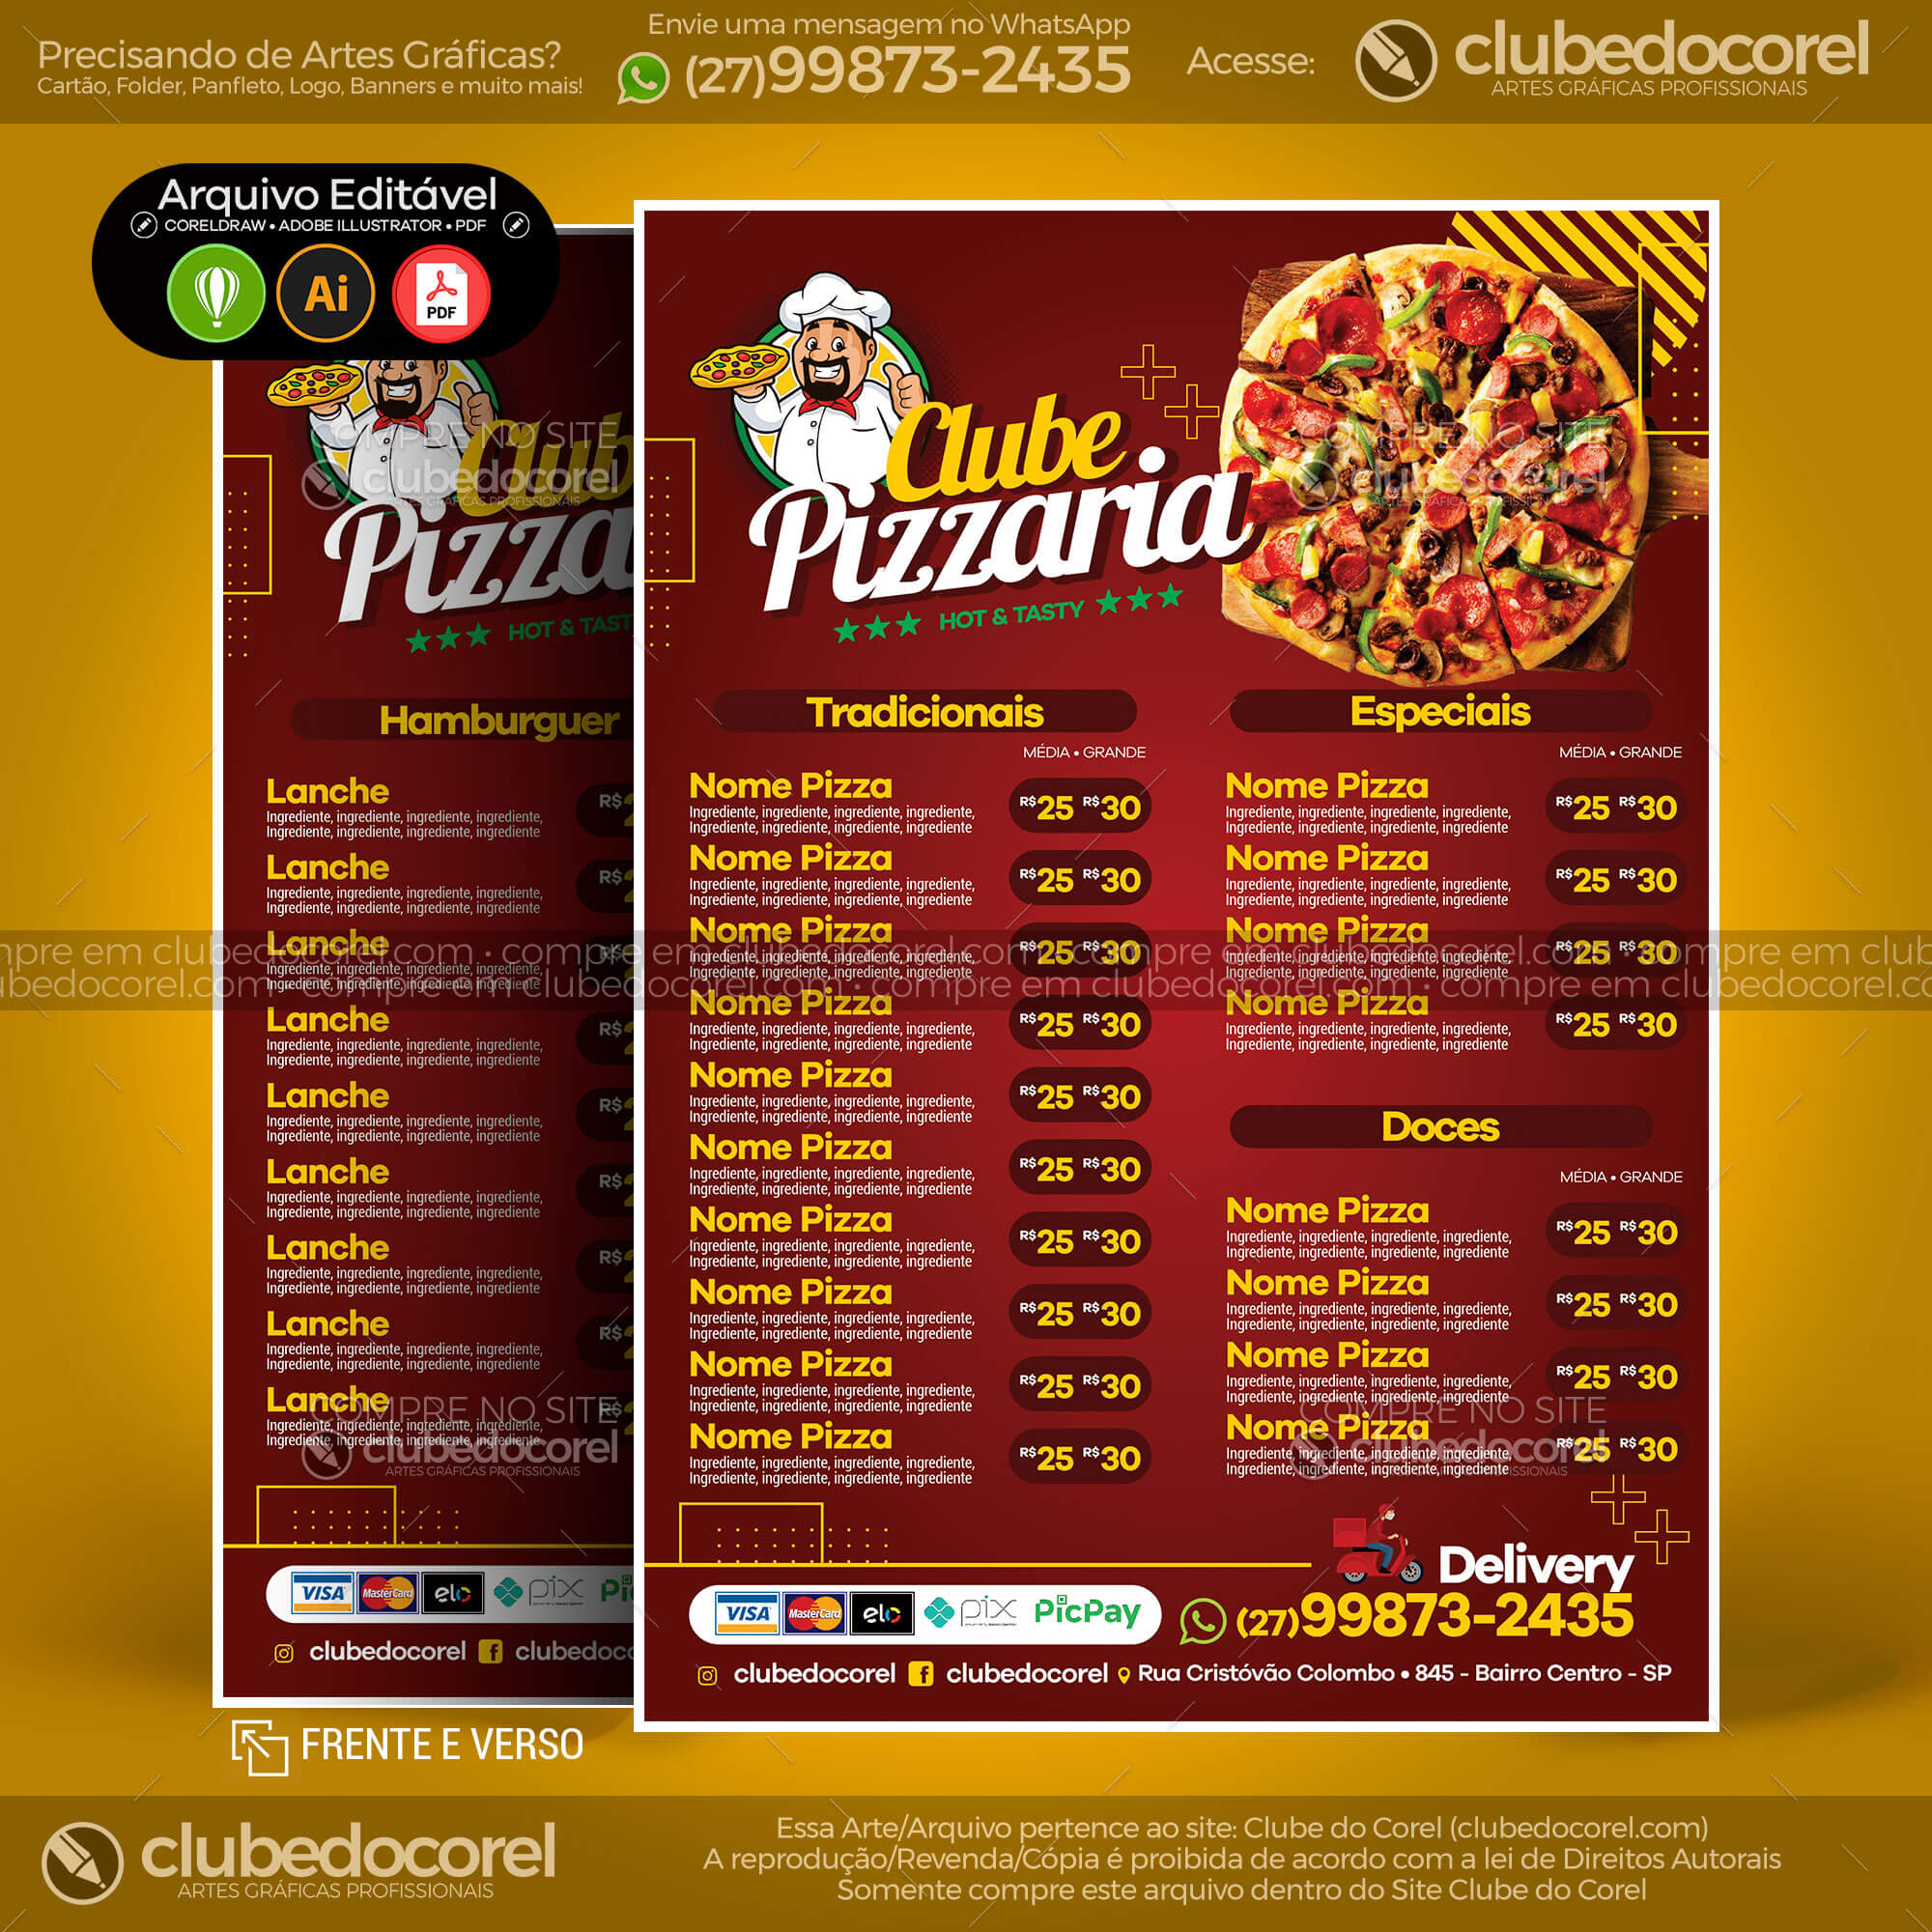 Cardápio Pizzaria #03 - Pizza Moderno [CDR AI PDF] | Clube do Corel - cardapio pizzaria